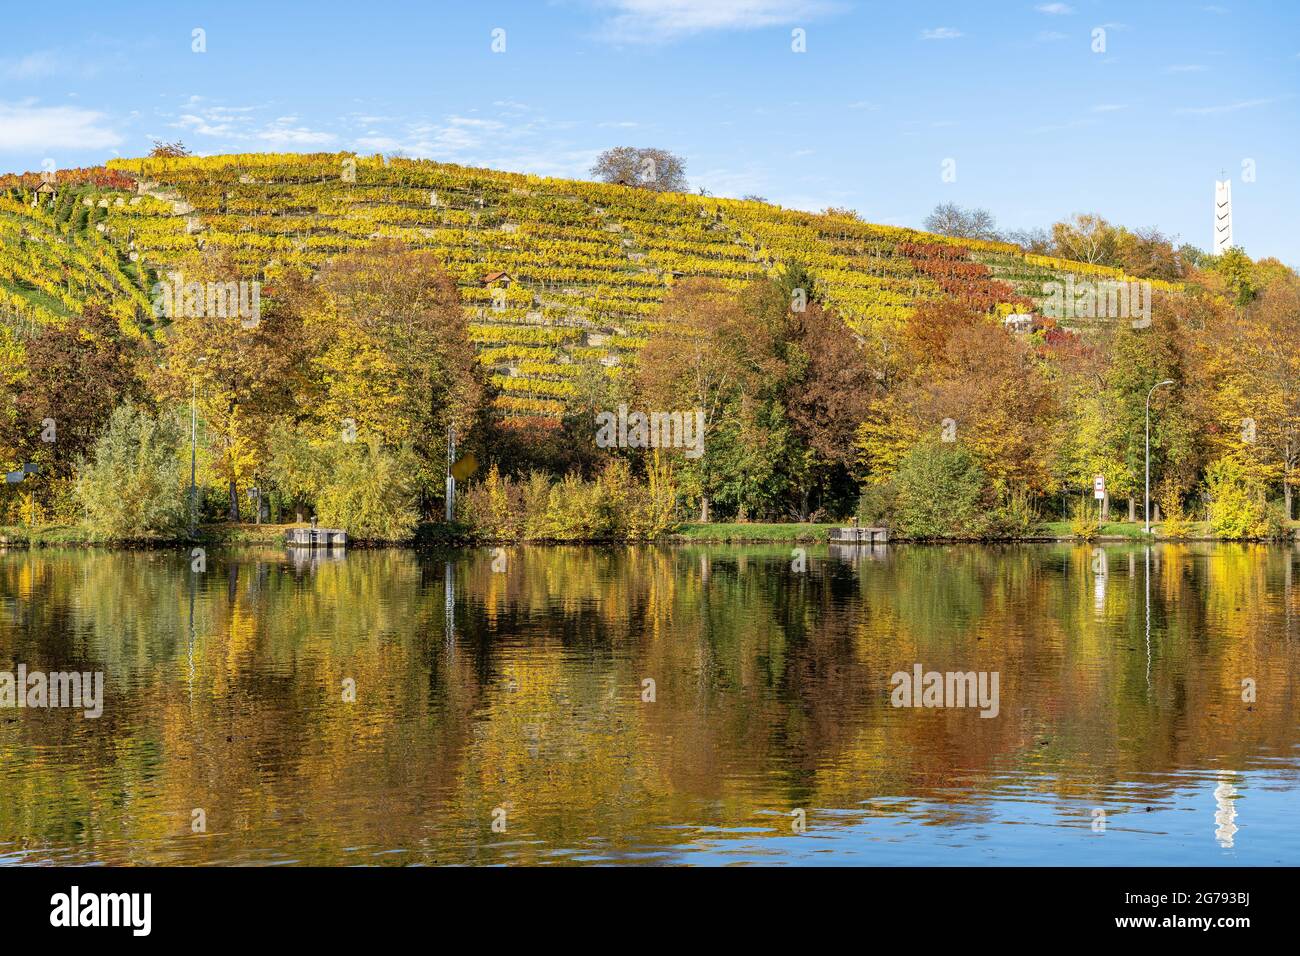 Europe, Germany, Baden-Wuerttemberg, Stuttgart, view of the autumnal colored vineyards of Cannstatter Zuckerle on the Neckar Stock Photo